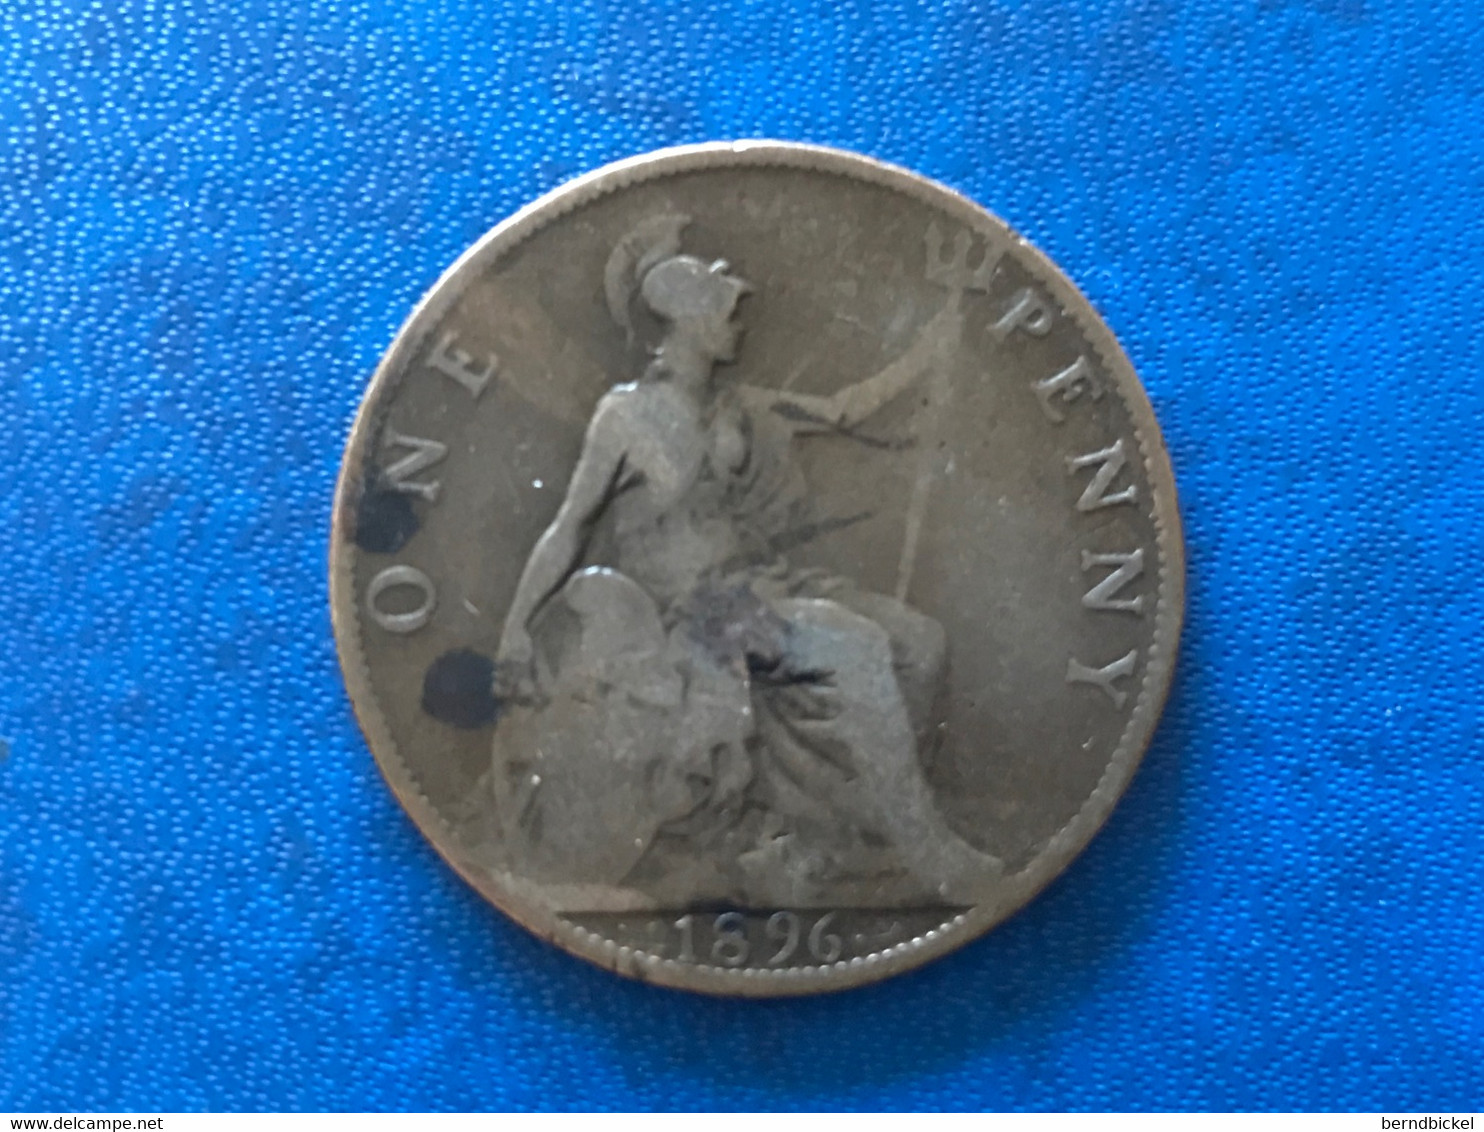 Münze Münzen Umlaufmünze Großbritannien 1 Penny 1896 - D. 1 Penny